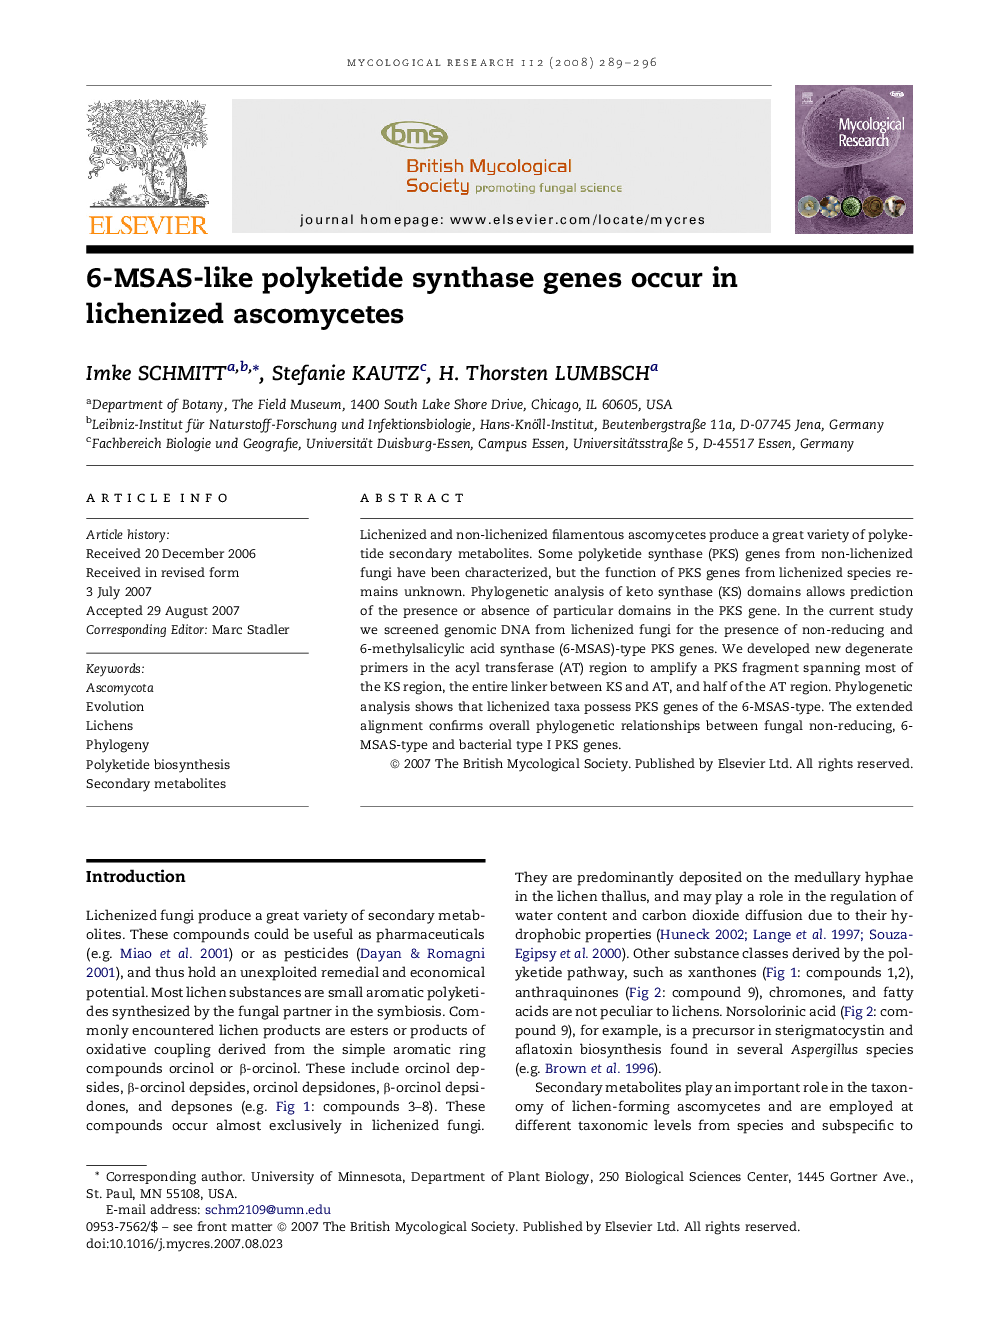 6-MSAS-like polyketide synthase genes occur in lichenized ascomycetes